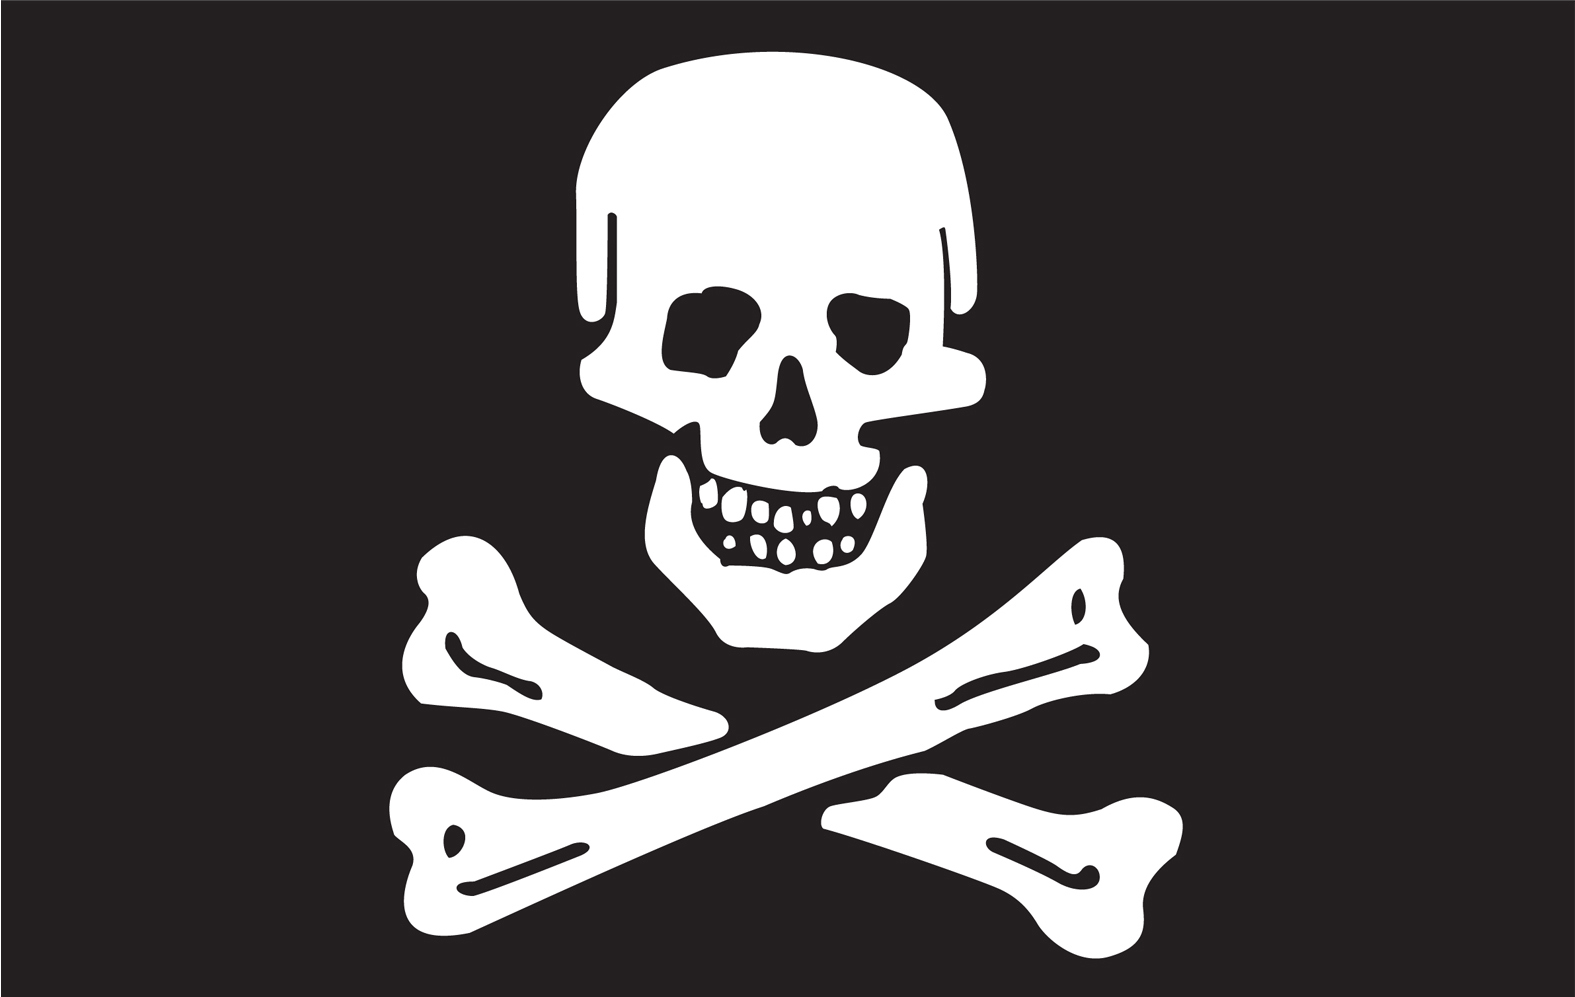 Original Jolly Roger Flag Gotten The Pirate Speak